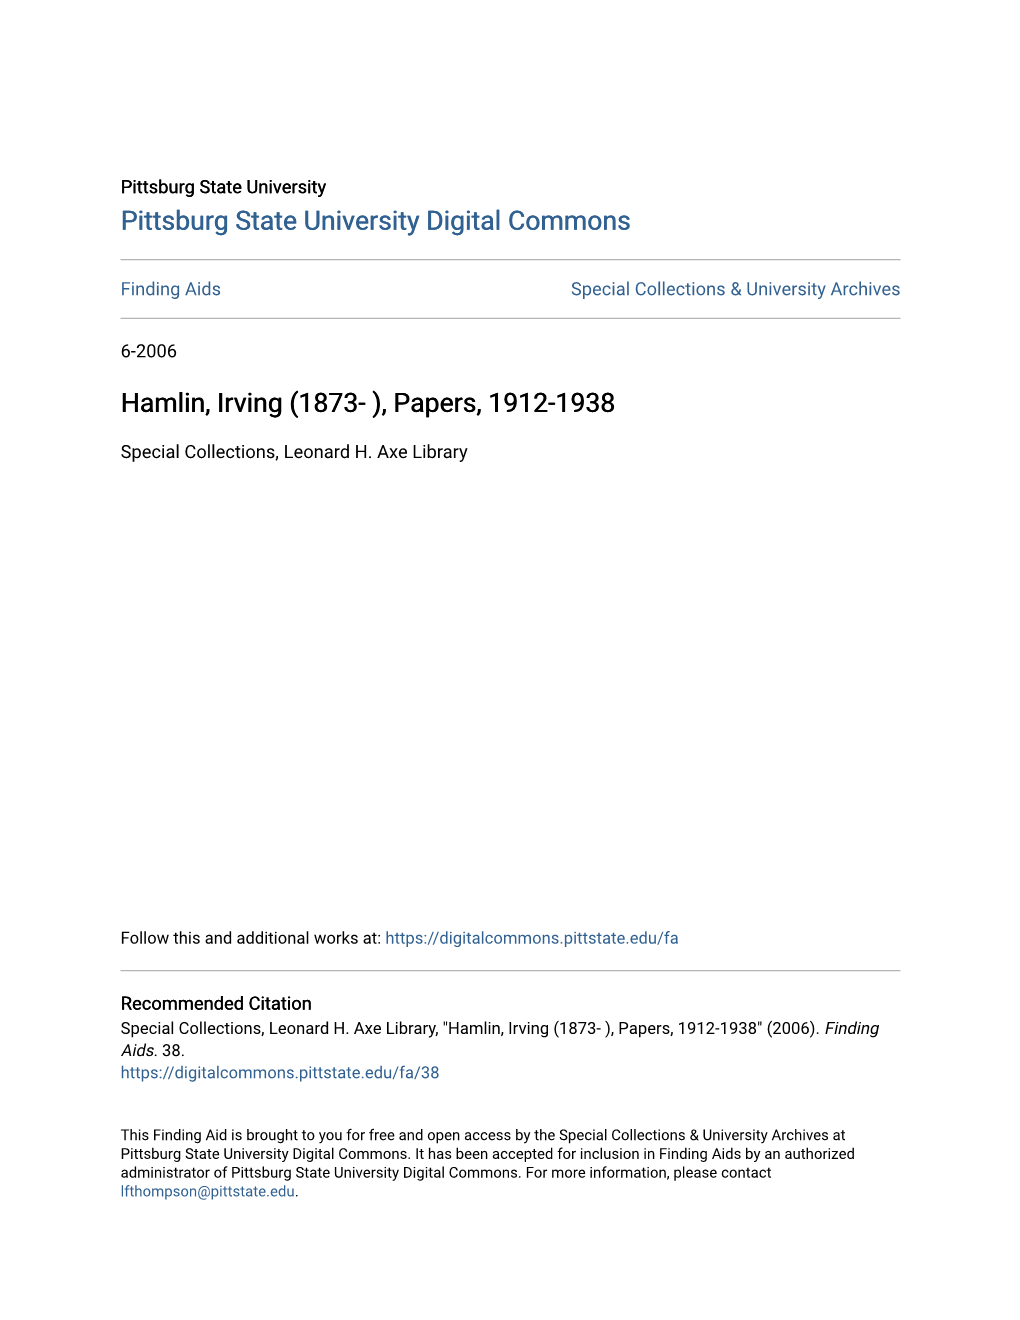 Hamlin, Irving (1873- ), Papers, 1912-1938